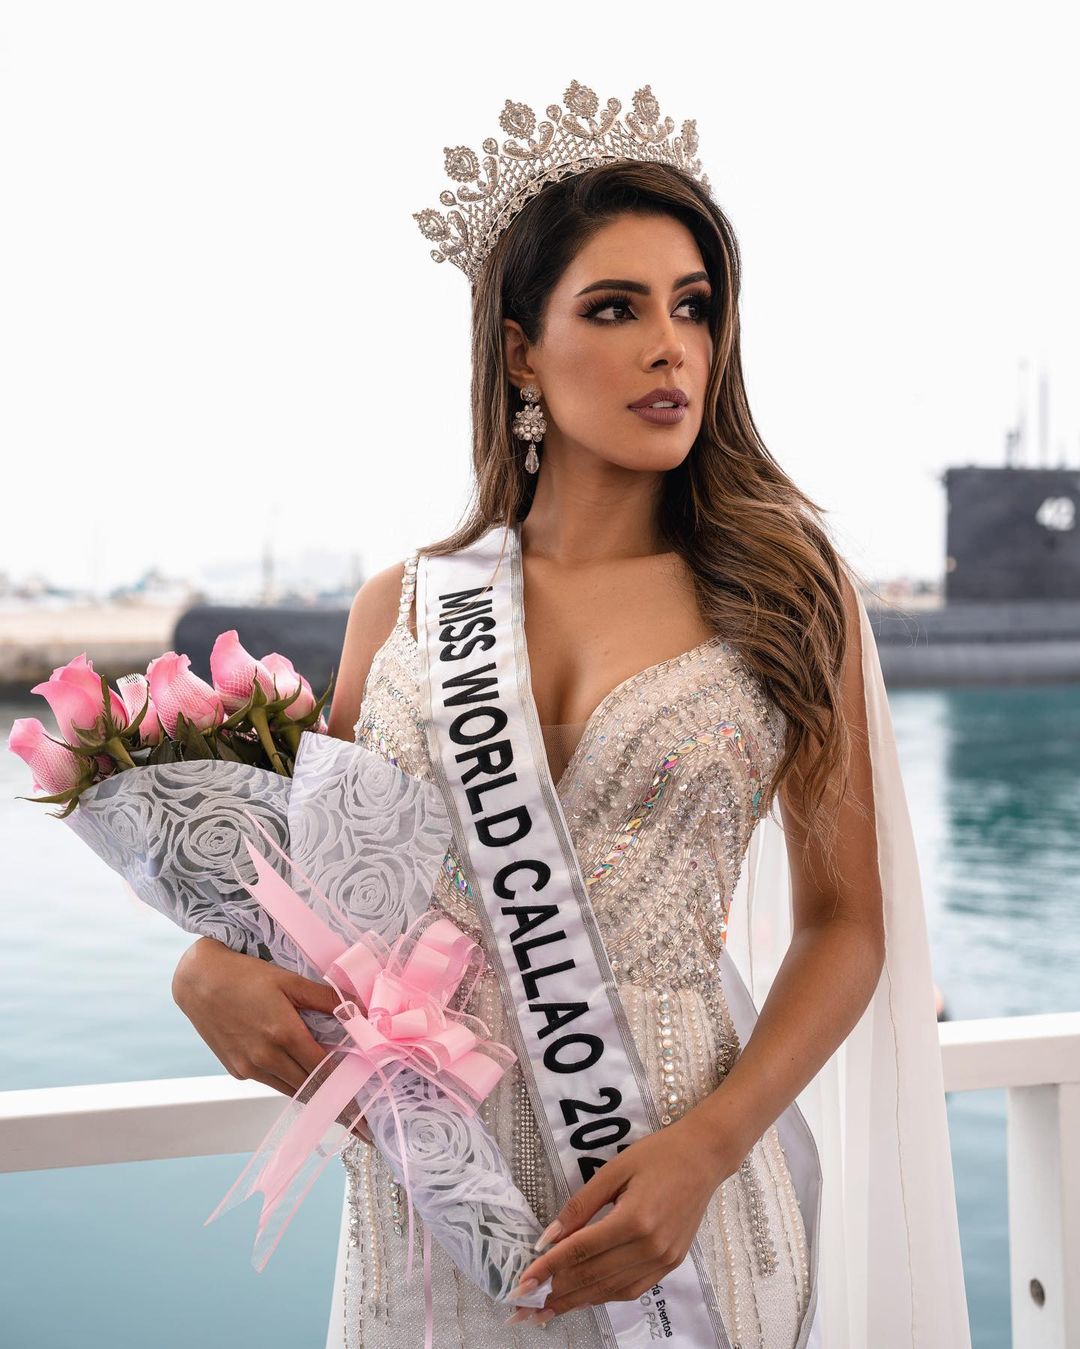 Almendra Castillo se coronó como Miss Supranational Perú 2022. (Foto: Instagram/@almendracastilloobrien)